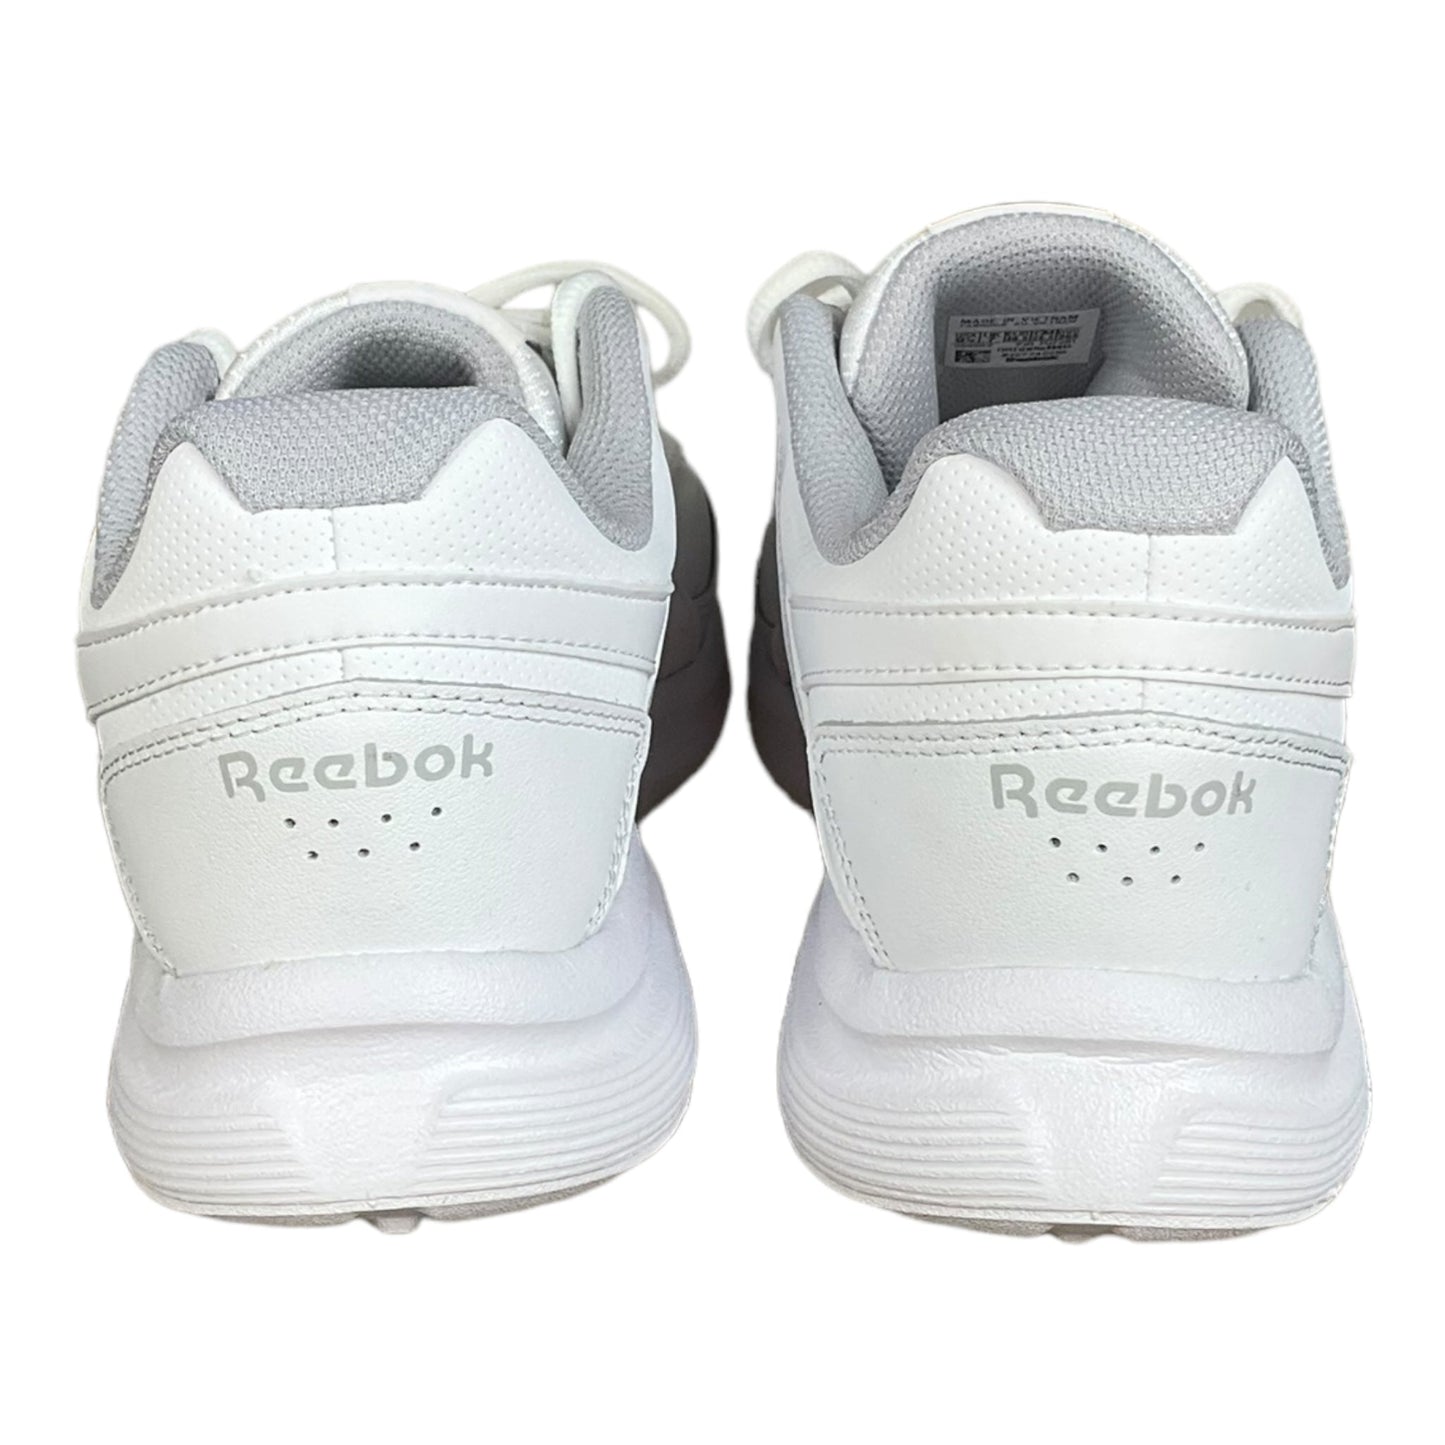 Grey & White Shoes Athletic Reebok, Size 9.5